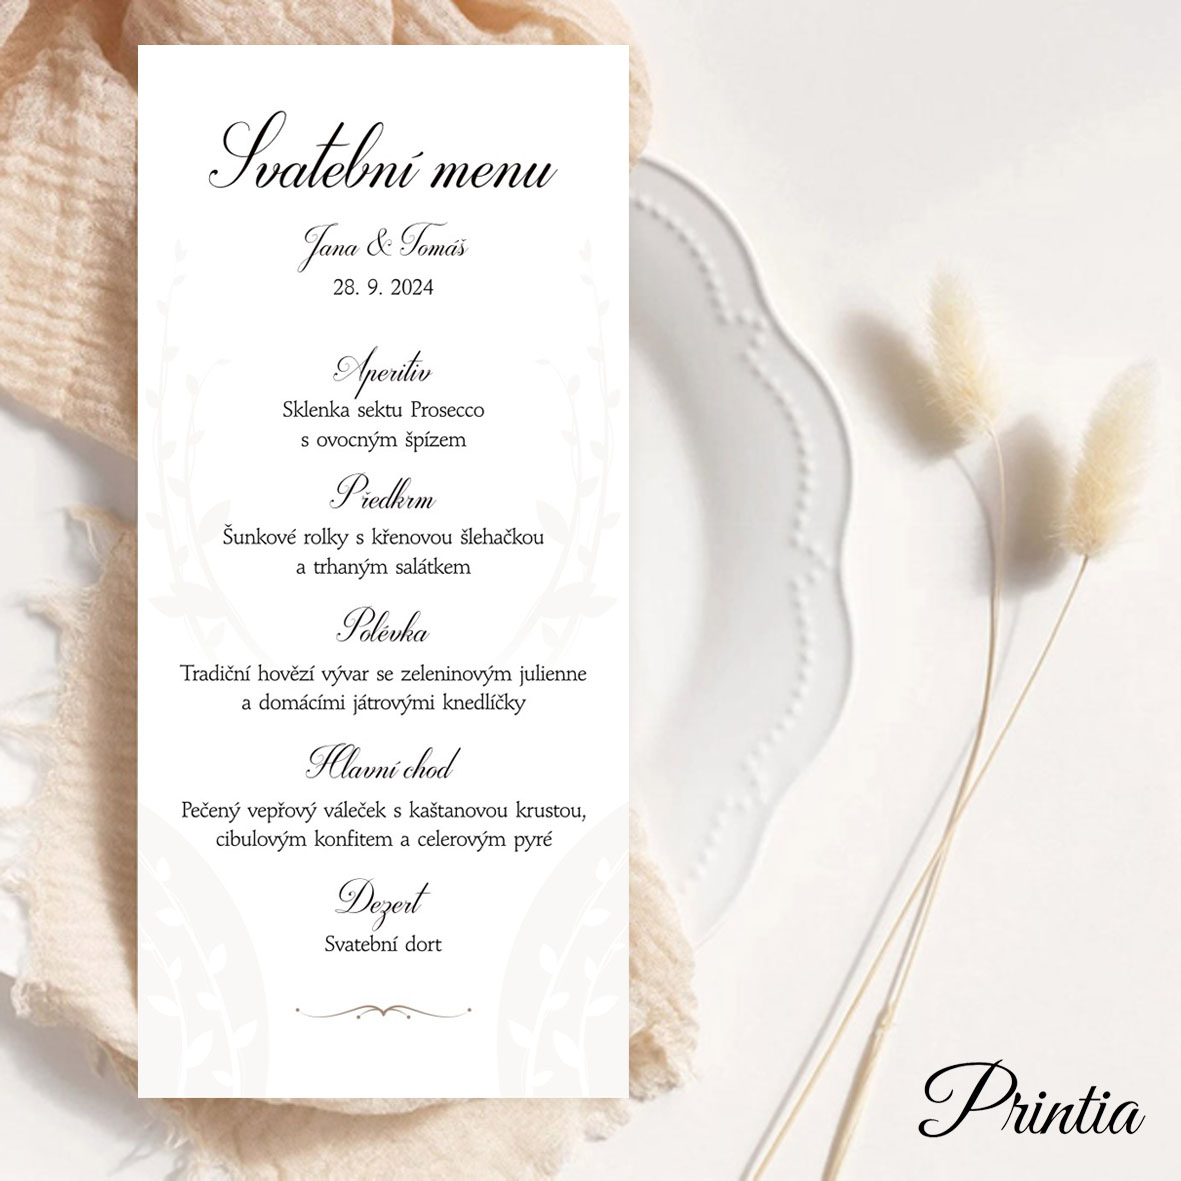 Wedding menu with small ornament